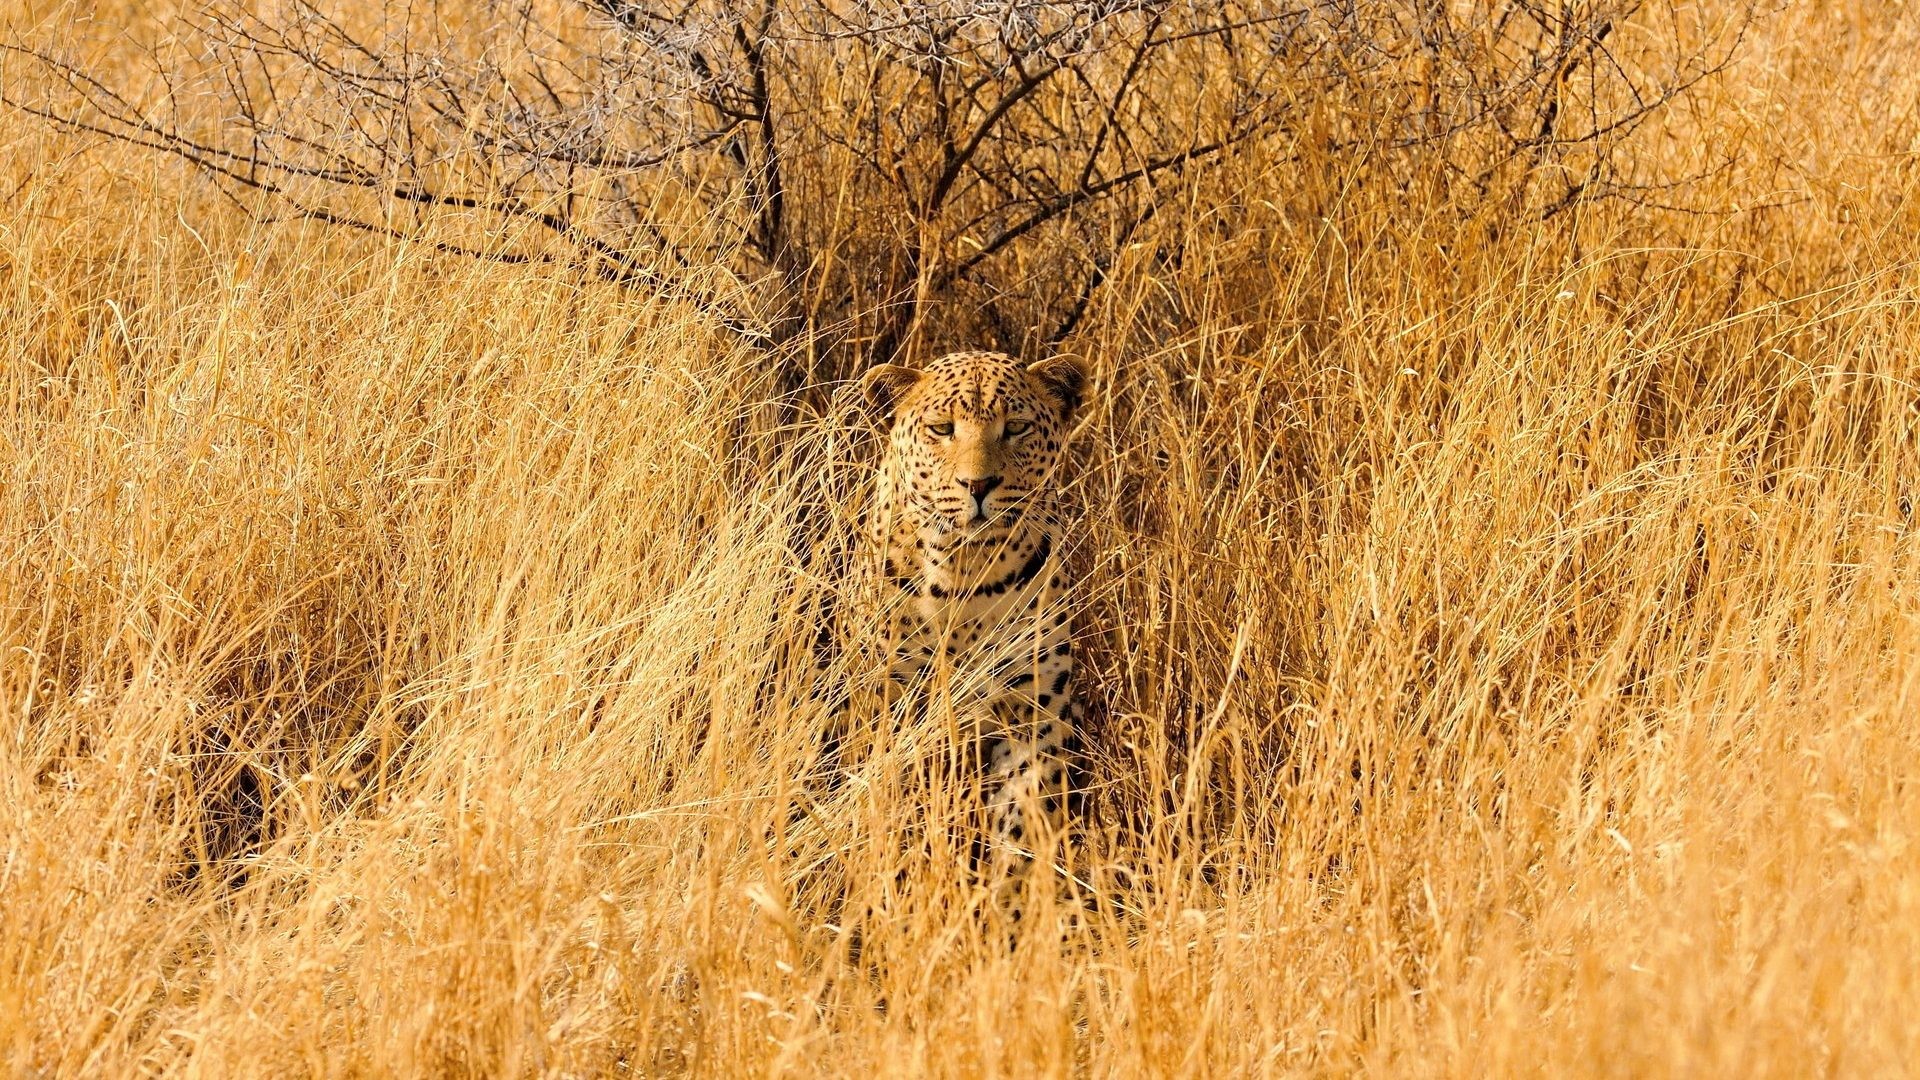 1920x1080 Grass Tag - Savannah Camo Grass Animals Fields Wildlife Leopard Landscapes  Predator Africa Spots Cats Picture